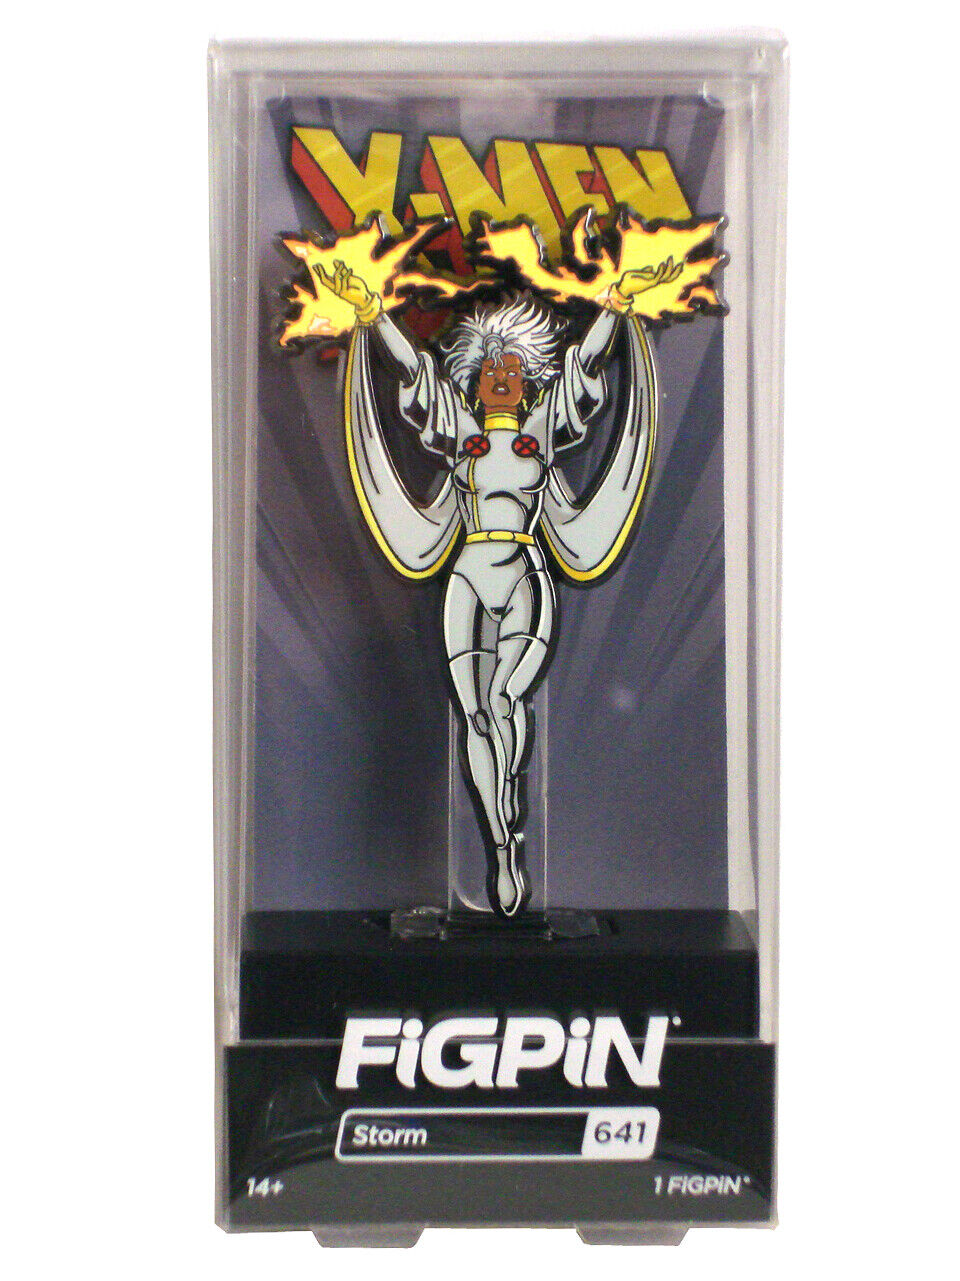 Figpin X-Men Classic Animated Storm Pin #641 Marvel Comics Brand New